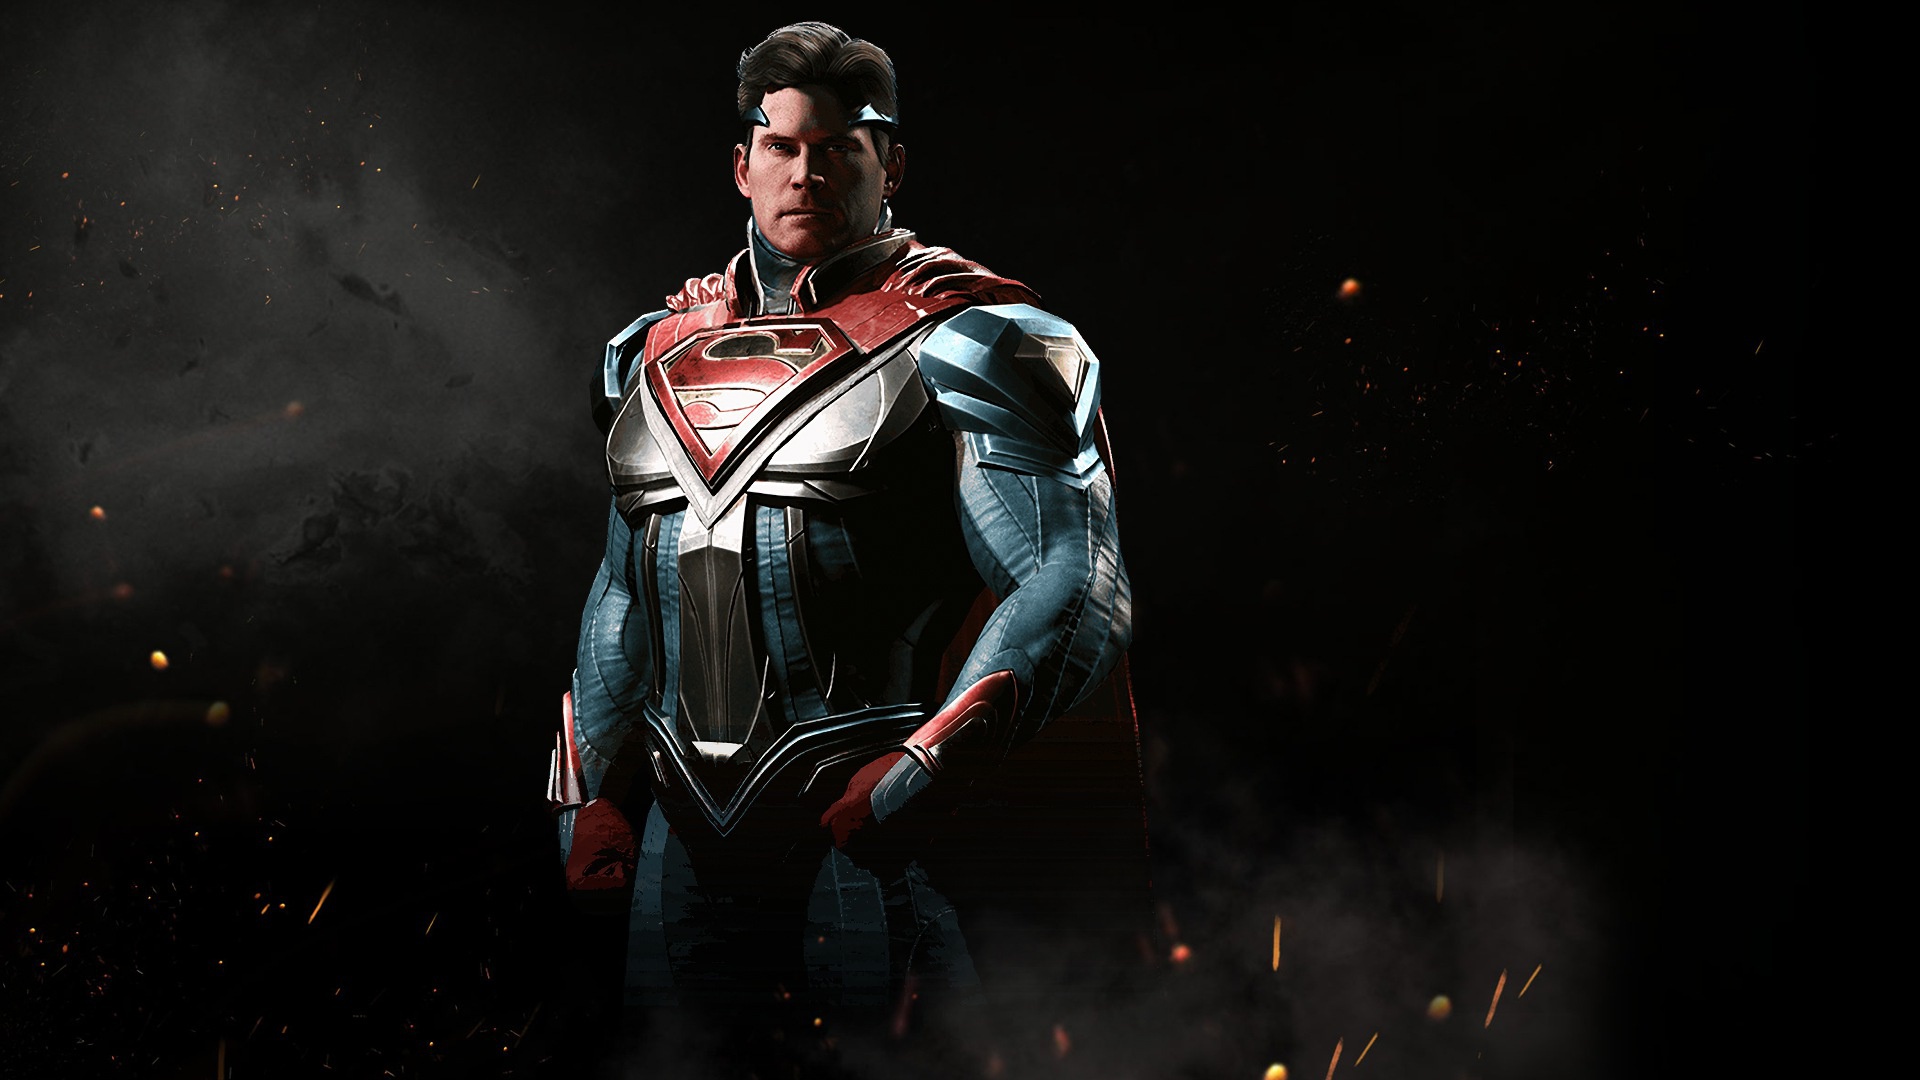 fond d'écran injustice,superman,super héros,personnage fictif,ligue de justice,ténèbres